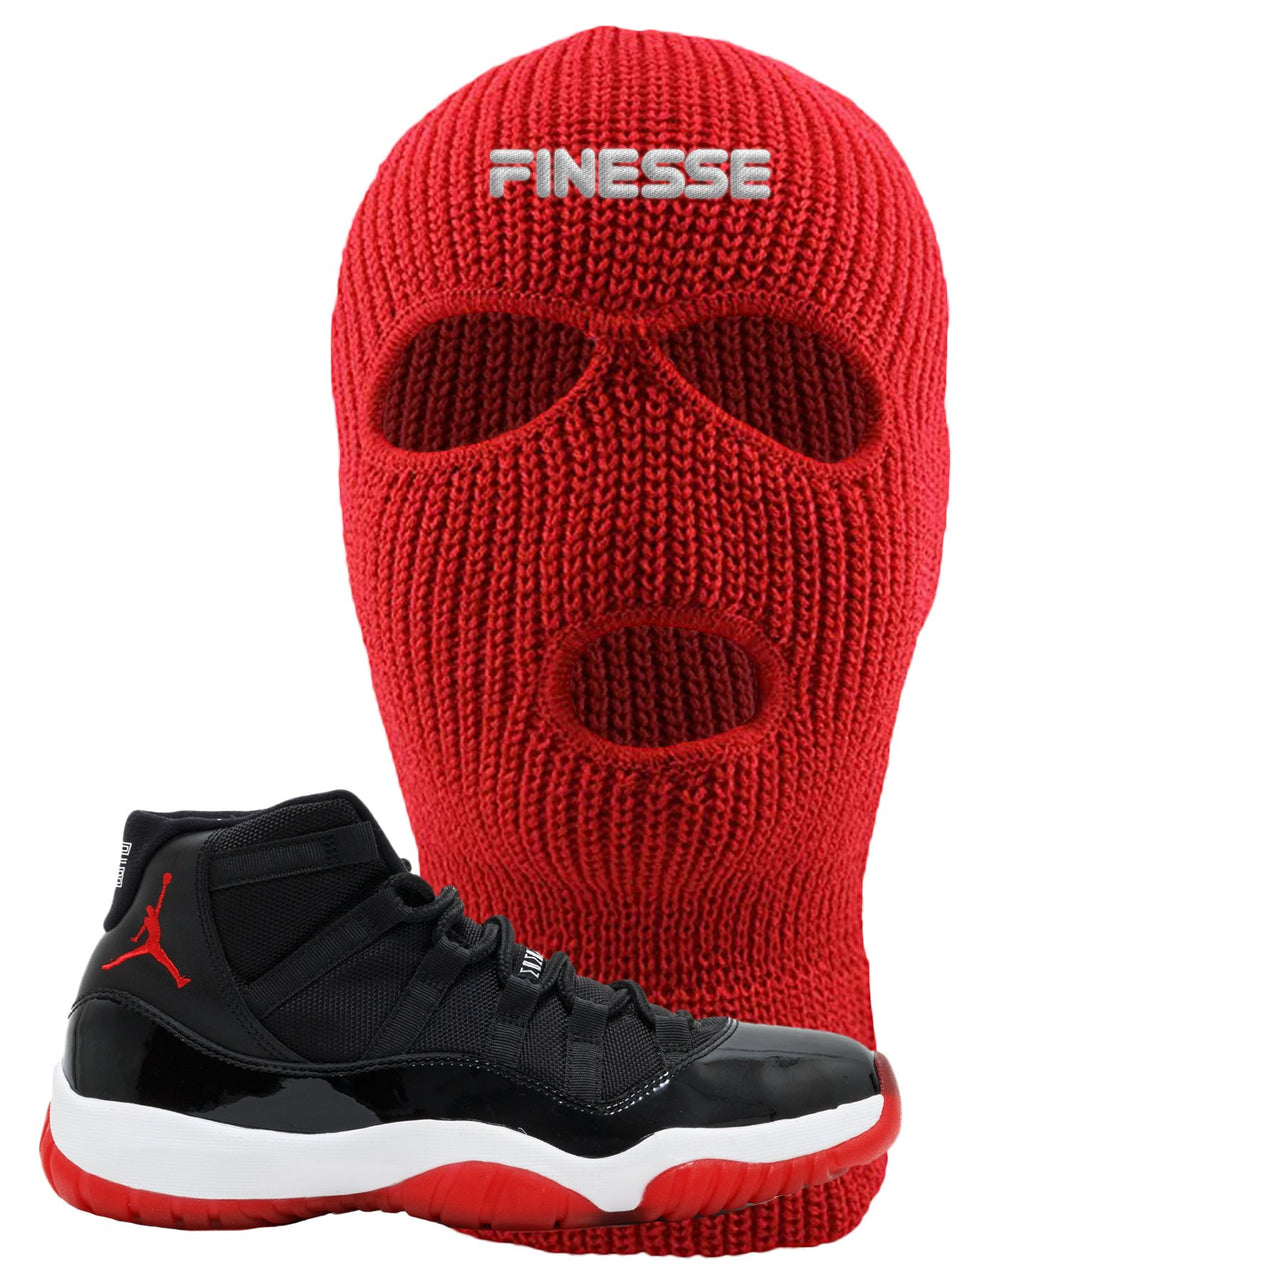 Jordan 11 Bred Finesse Red Sneaker Matching Ski Mask